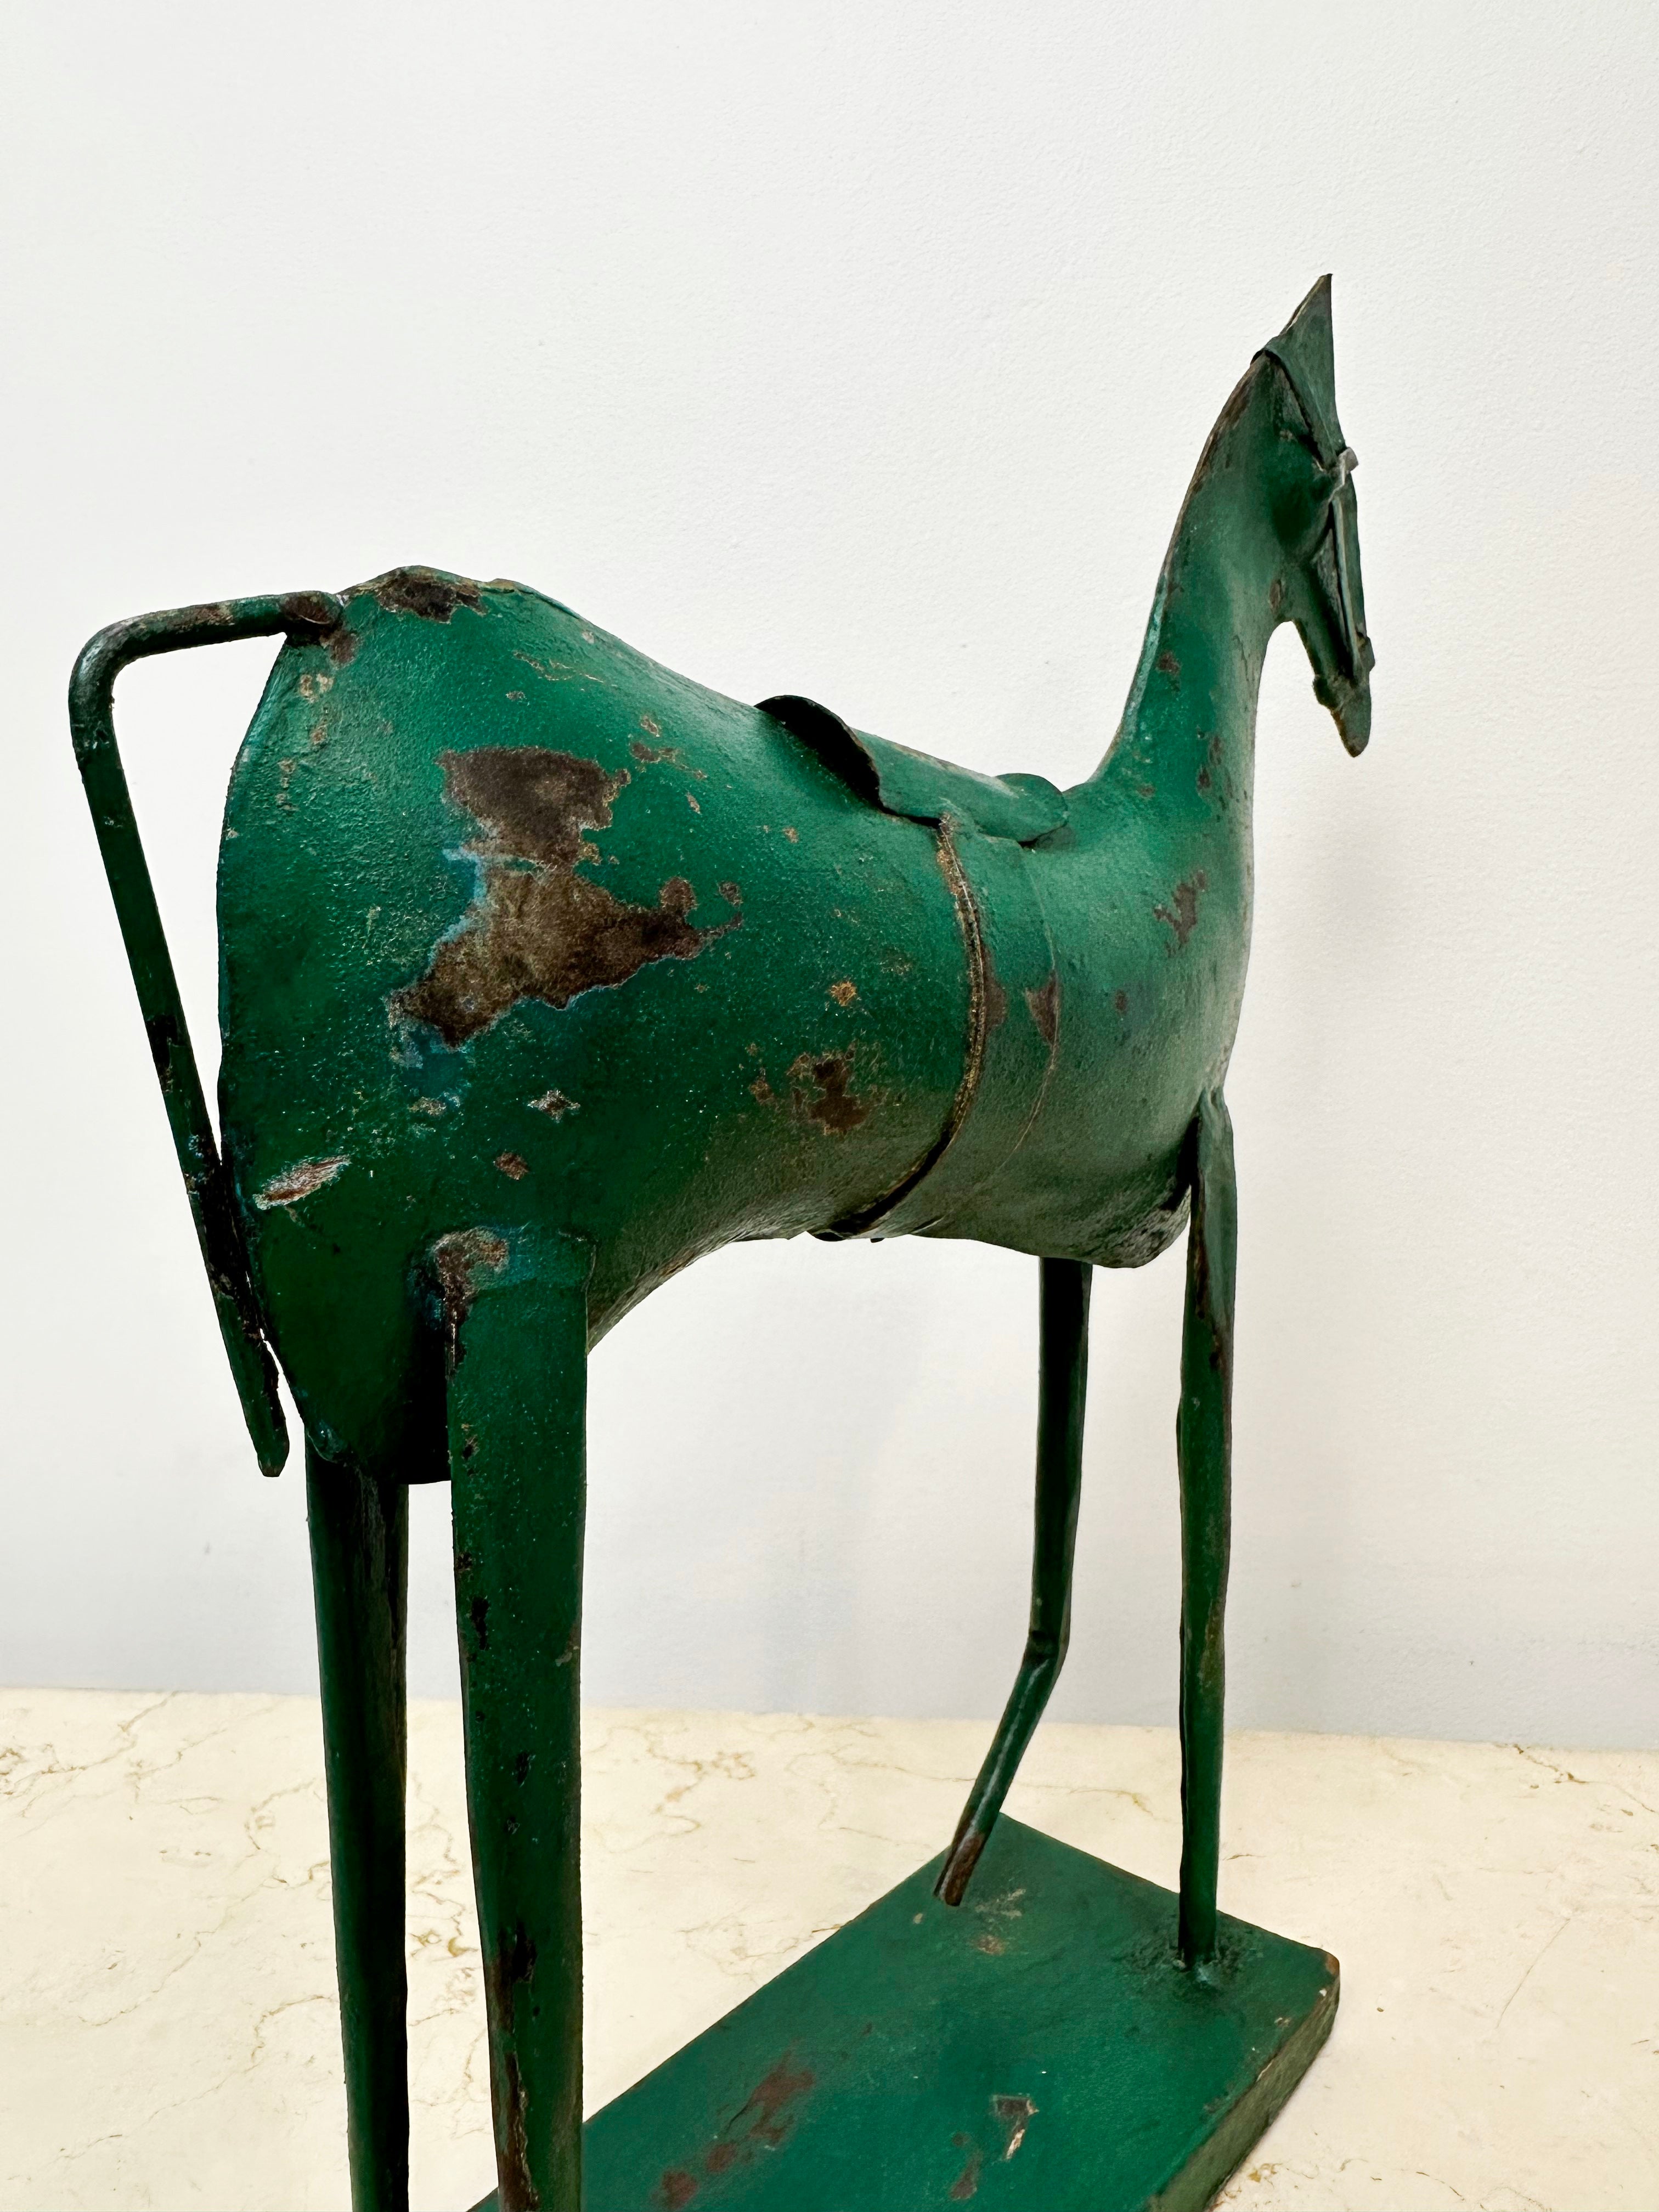 Vintage Rustic Metal Green Horse Decor | eXibit collection